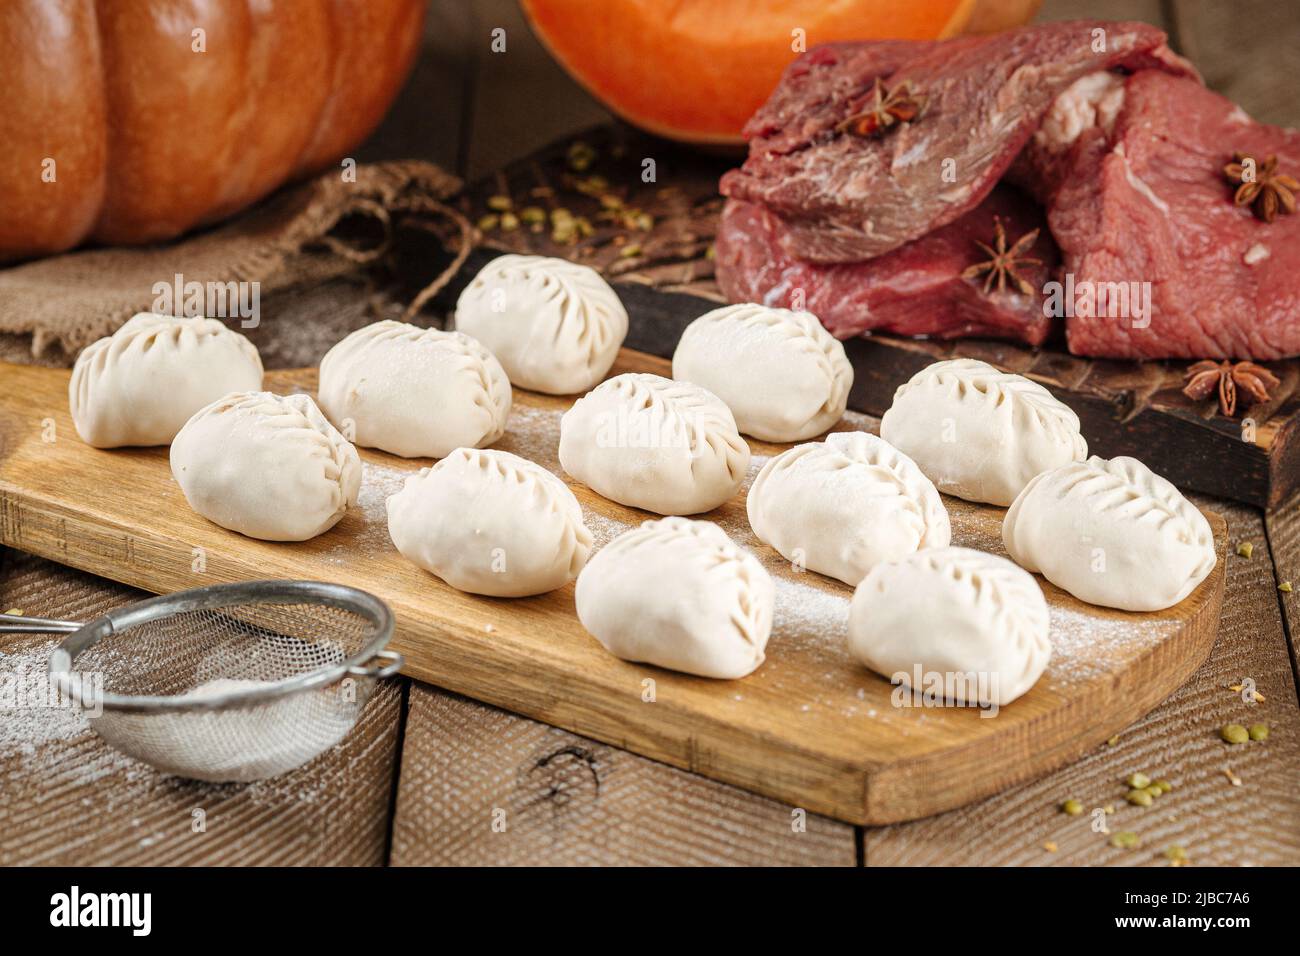 Dumplings de manti semiacabados Foto de stock